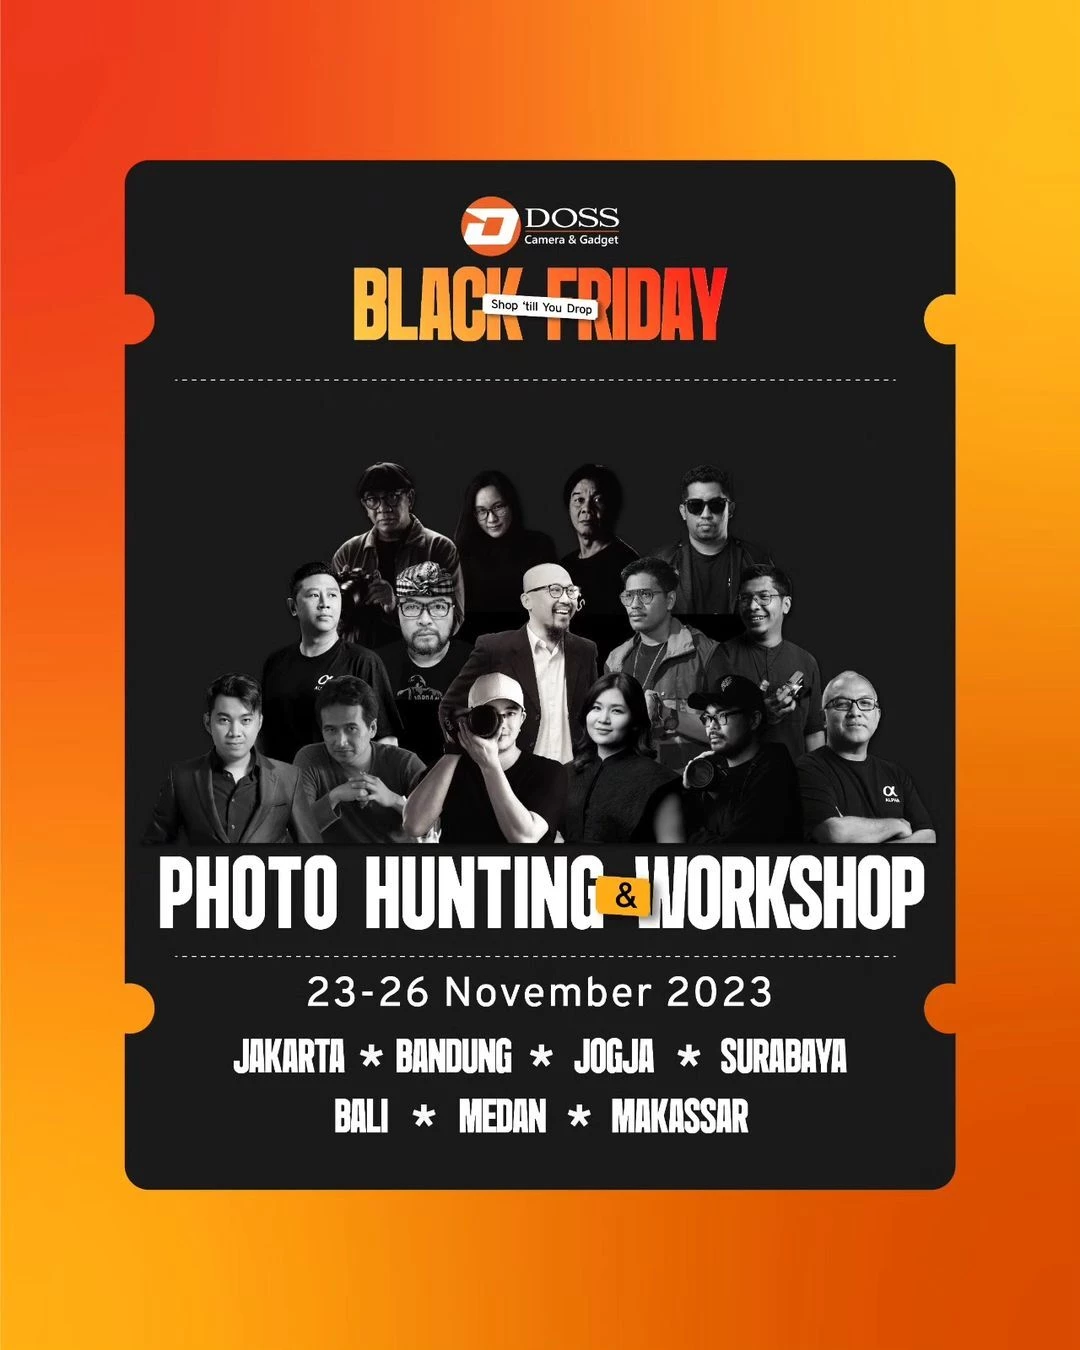 Yuk Ikutan Photo Hunting On the Spot Challenge Special DOSS Black Friday 23-26 November 2023 dan Dapatkan Hadiah Menariknya.